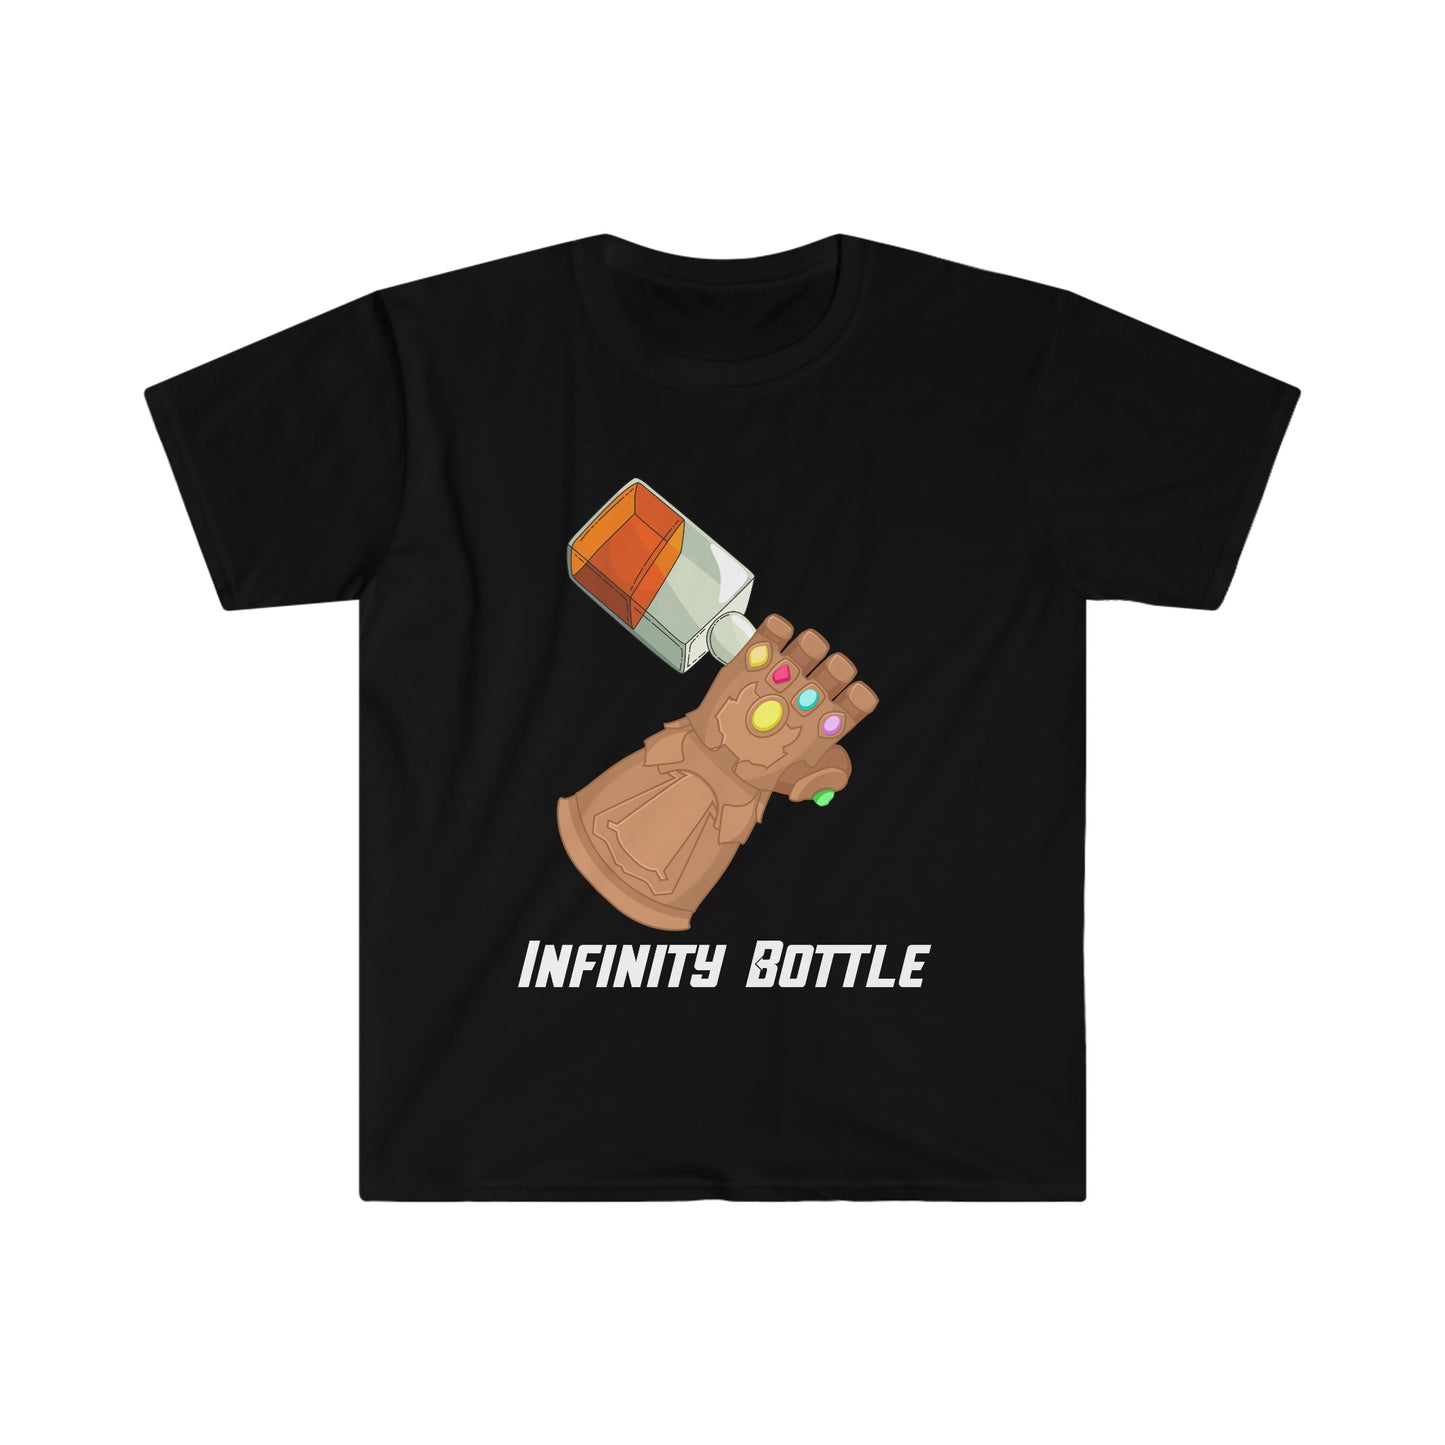 Infinity Bottle - Slimmer Fit